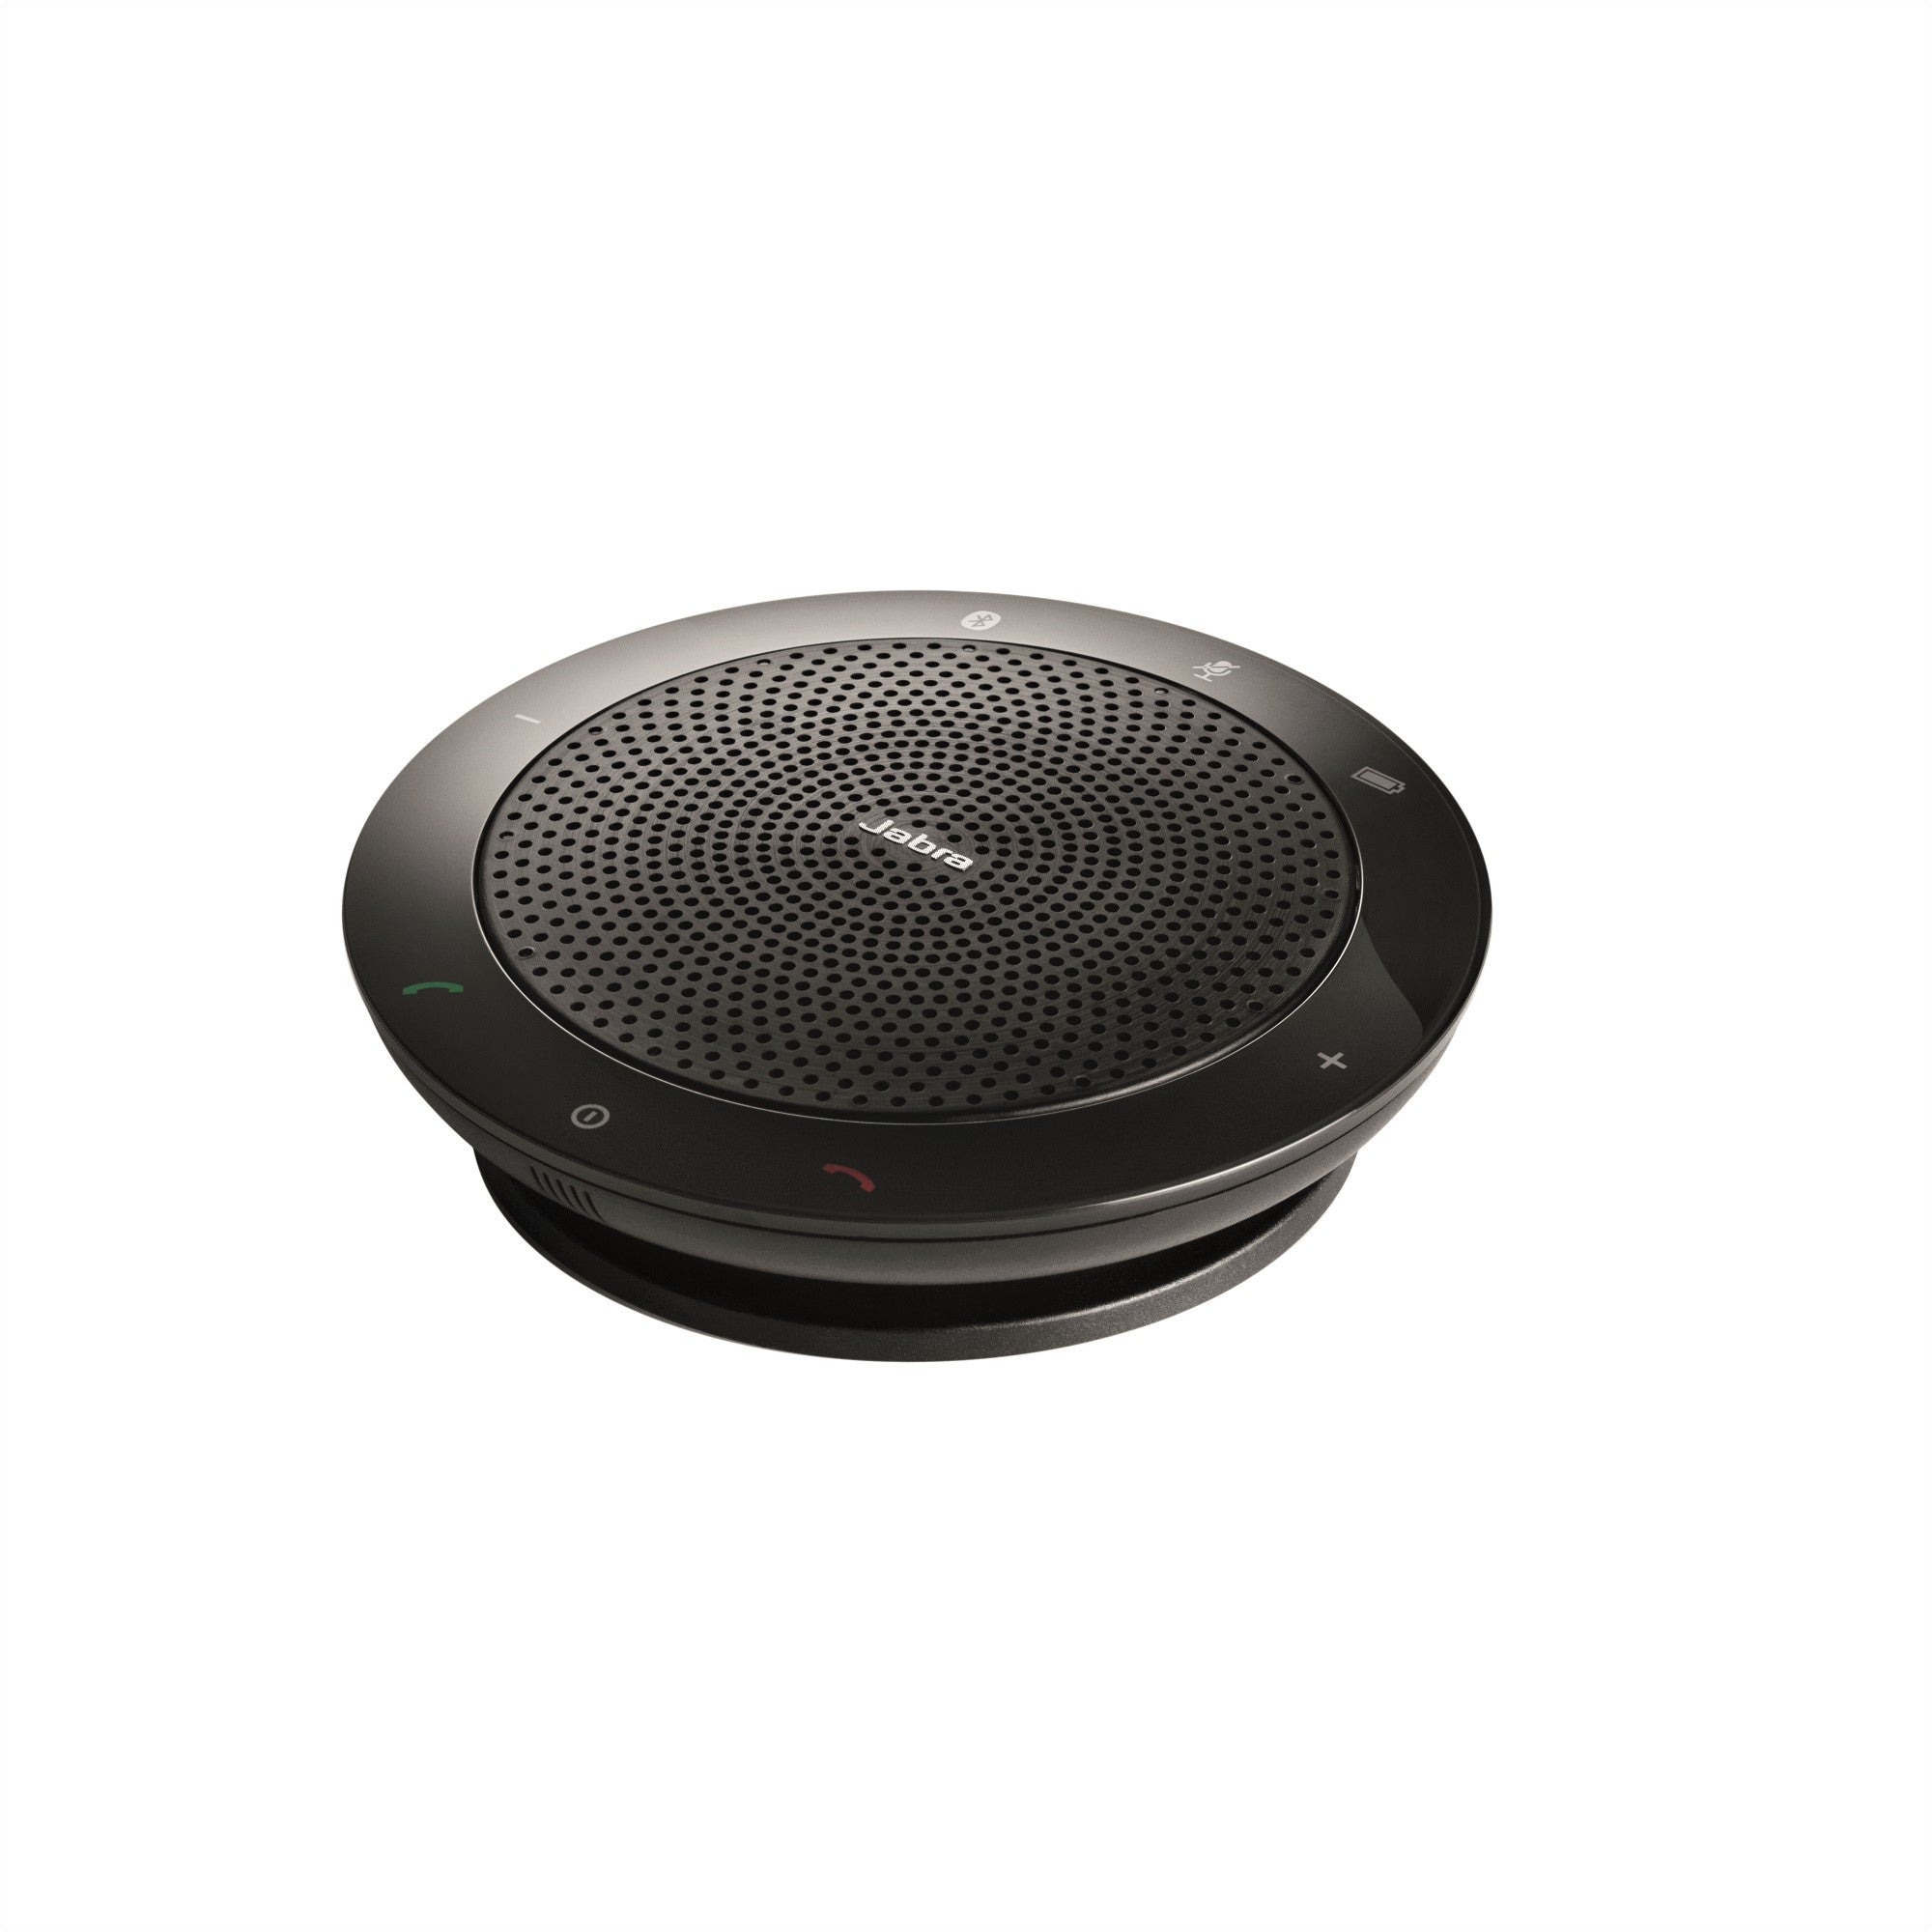 Jabra Speak 510 Bluetooth Speakerphone- Speaker for PC, MAC, Tablet, Smartphone